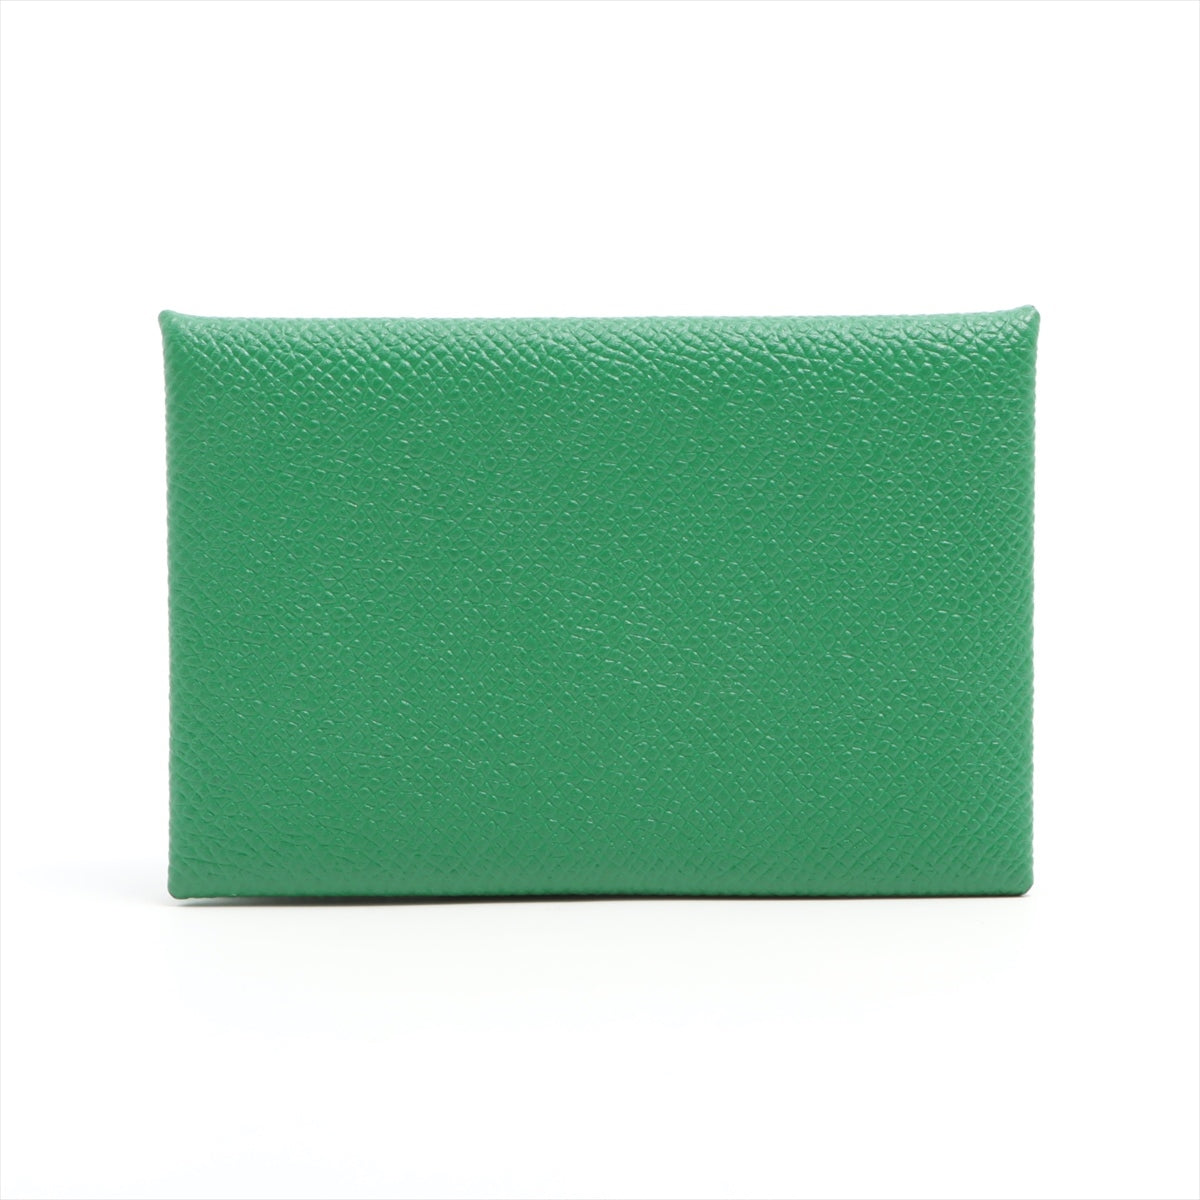 Hermès Calvi Veau Epsom Card Case Green Silver Metal fittings Z: 2021